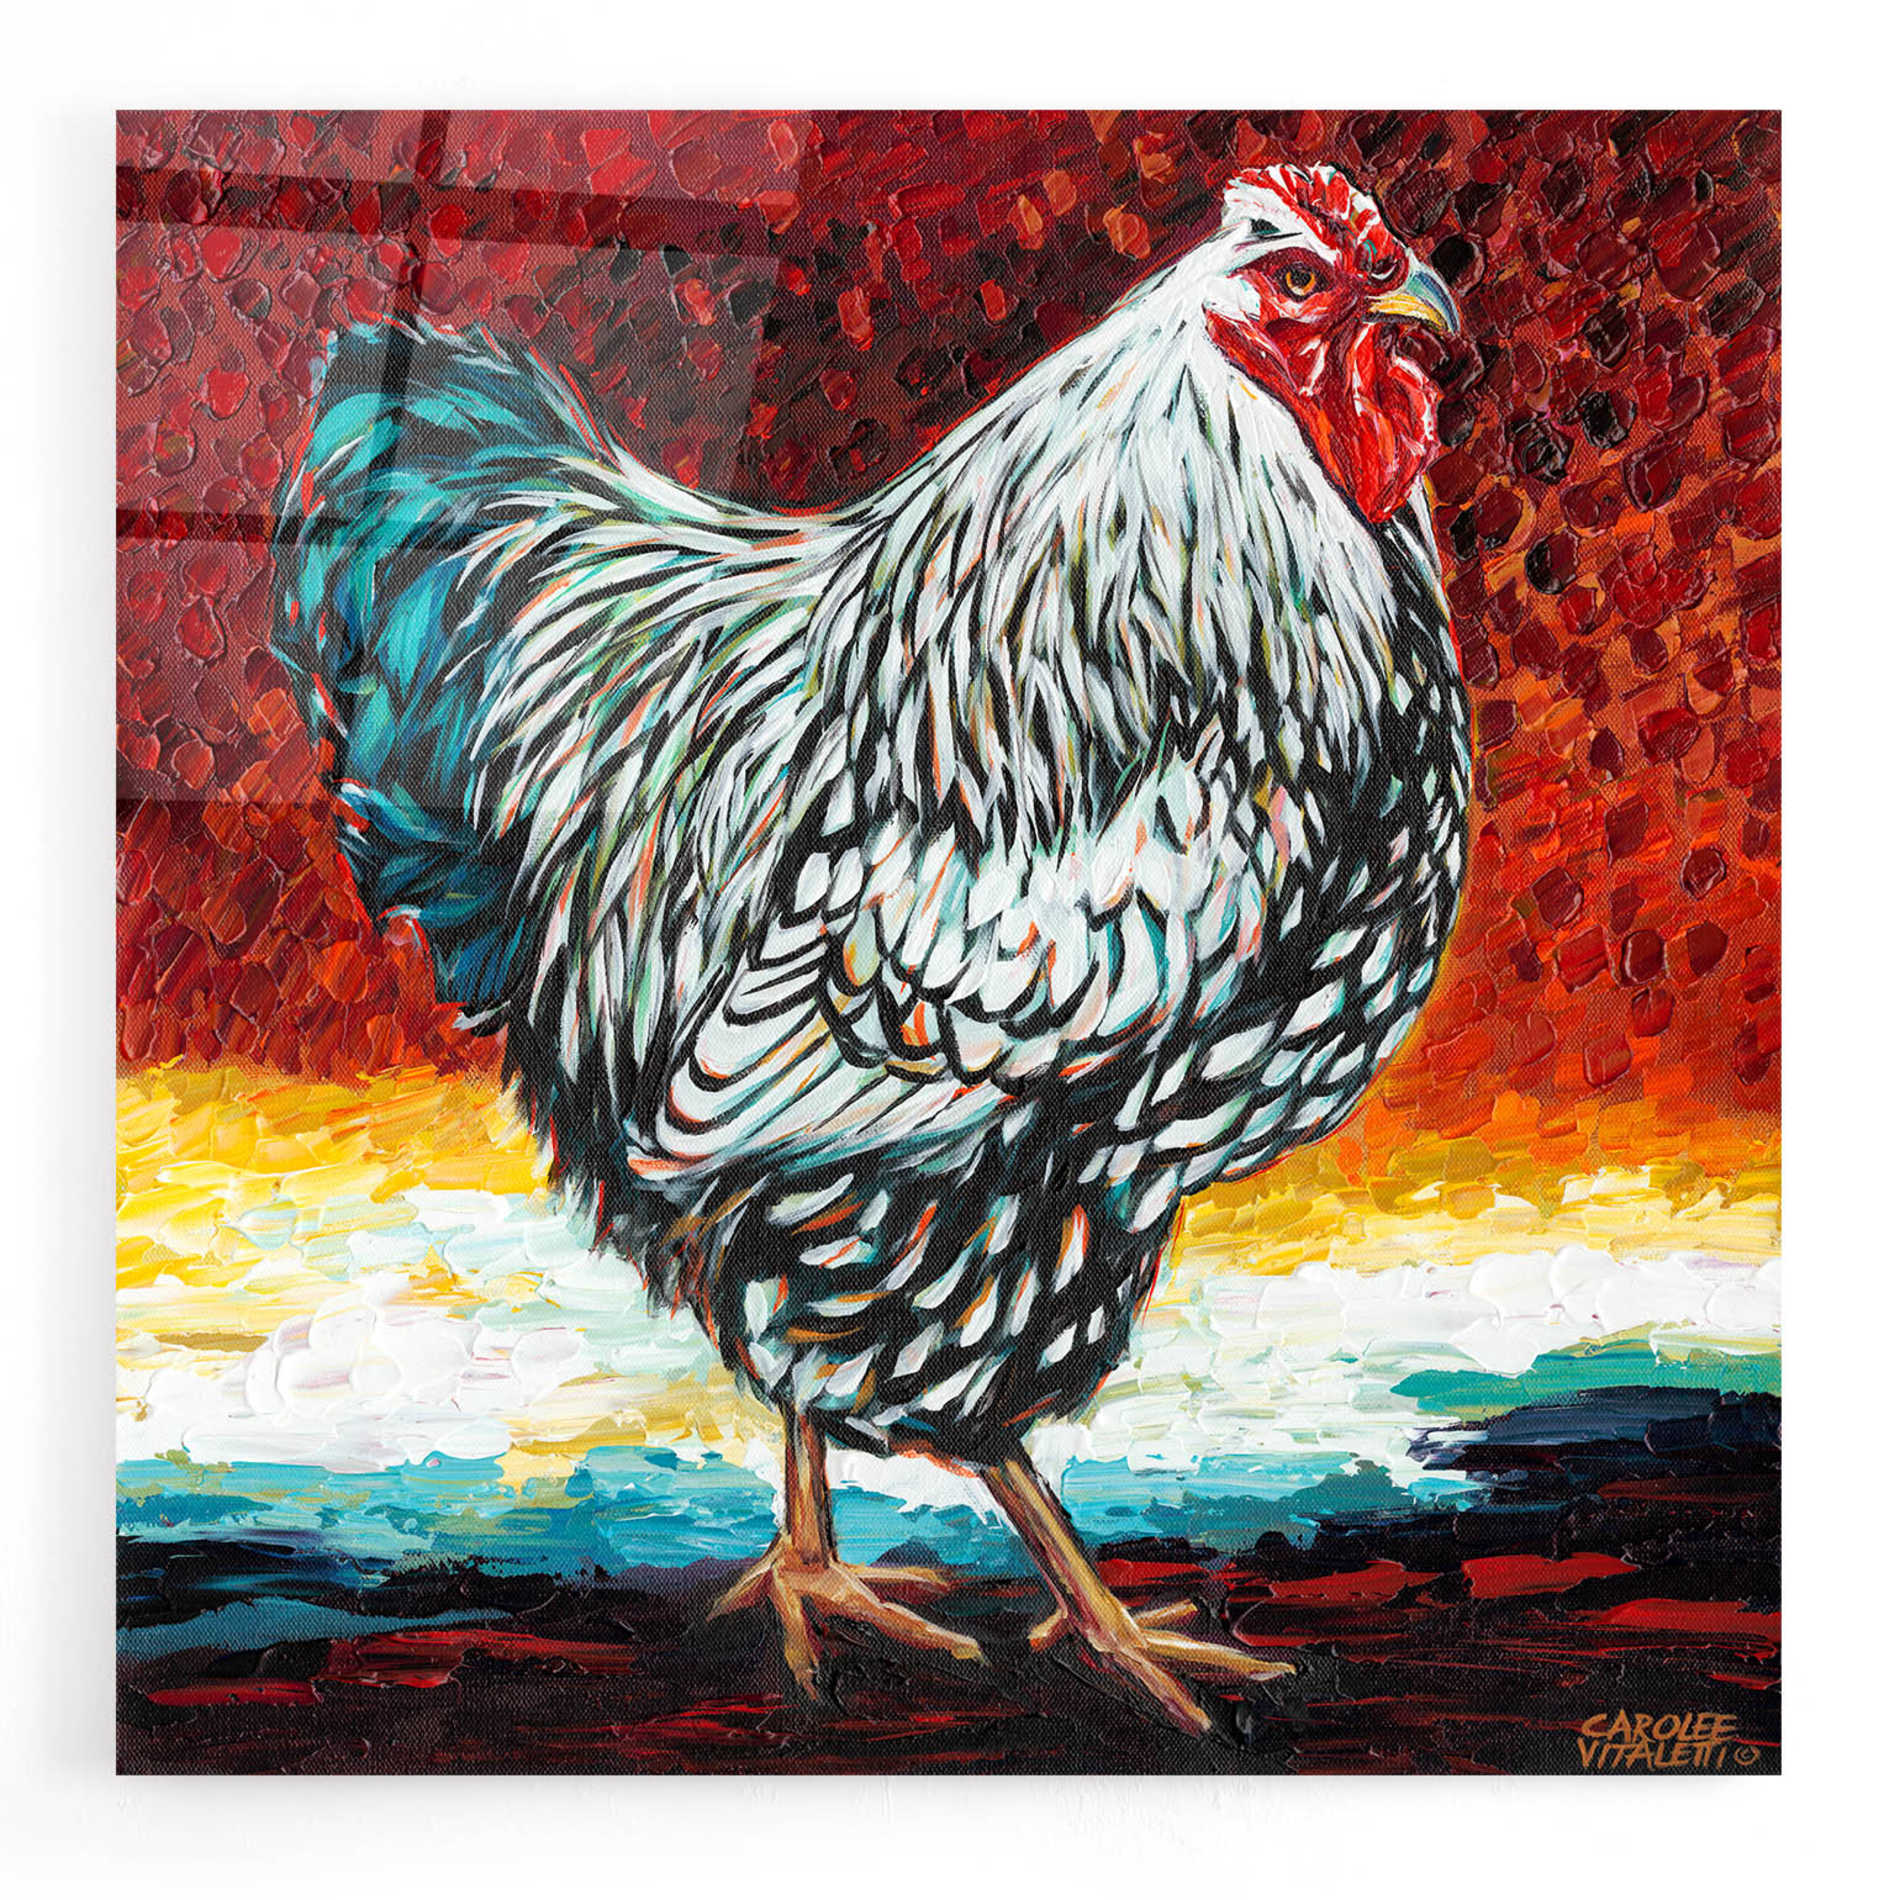 Epic Art 'Fancy Chicken I' by Carolee Vitaletti, Acrylic Glass Wall Art,12x12